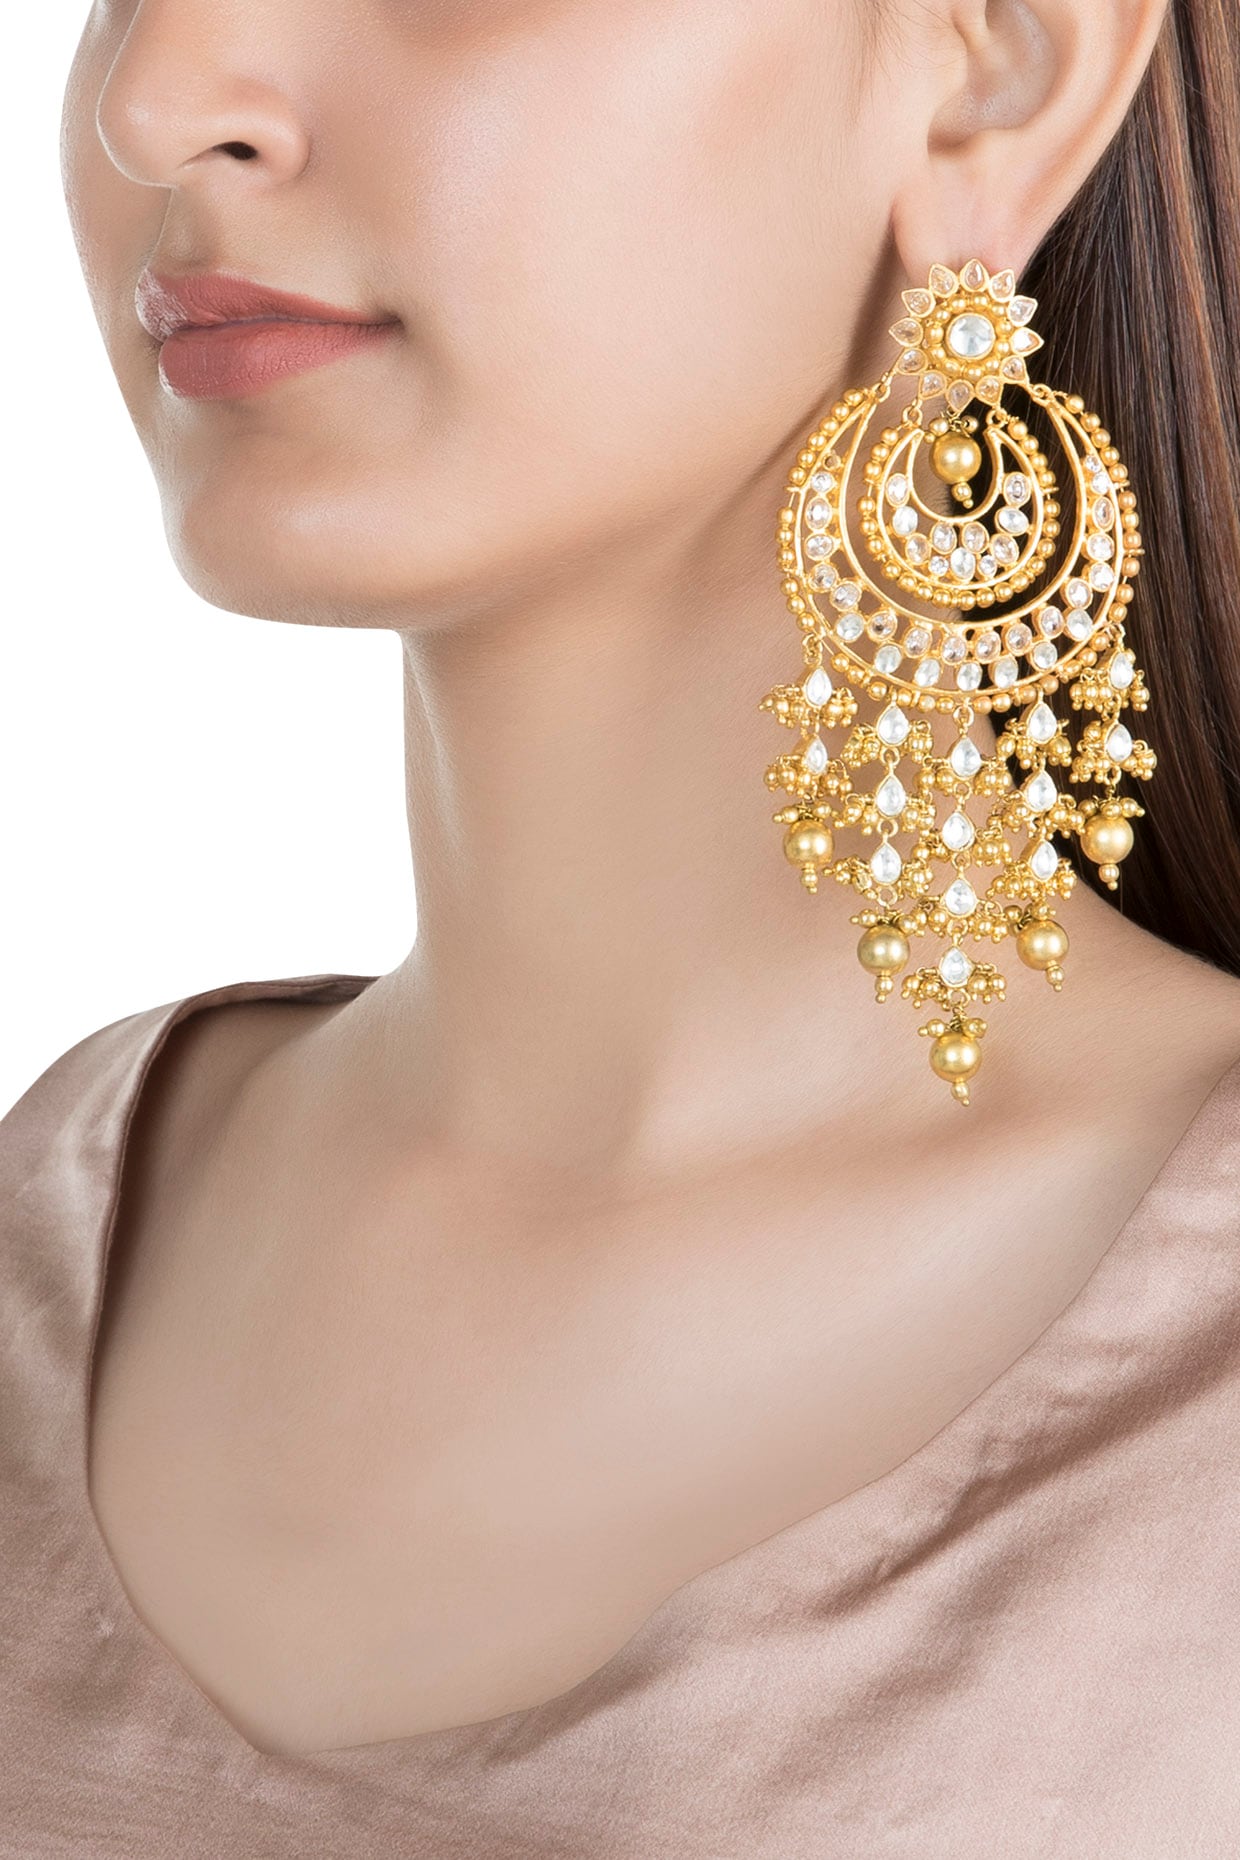 Lightweight Gold Chandbali | Freshwater Pearls | Real 22k Gold Earrings